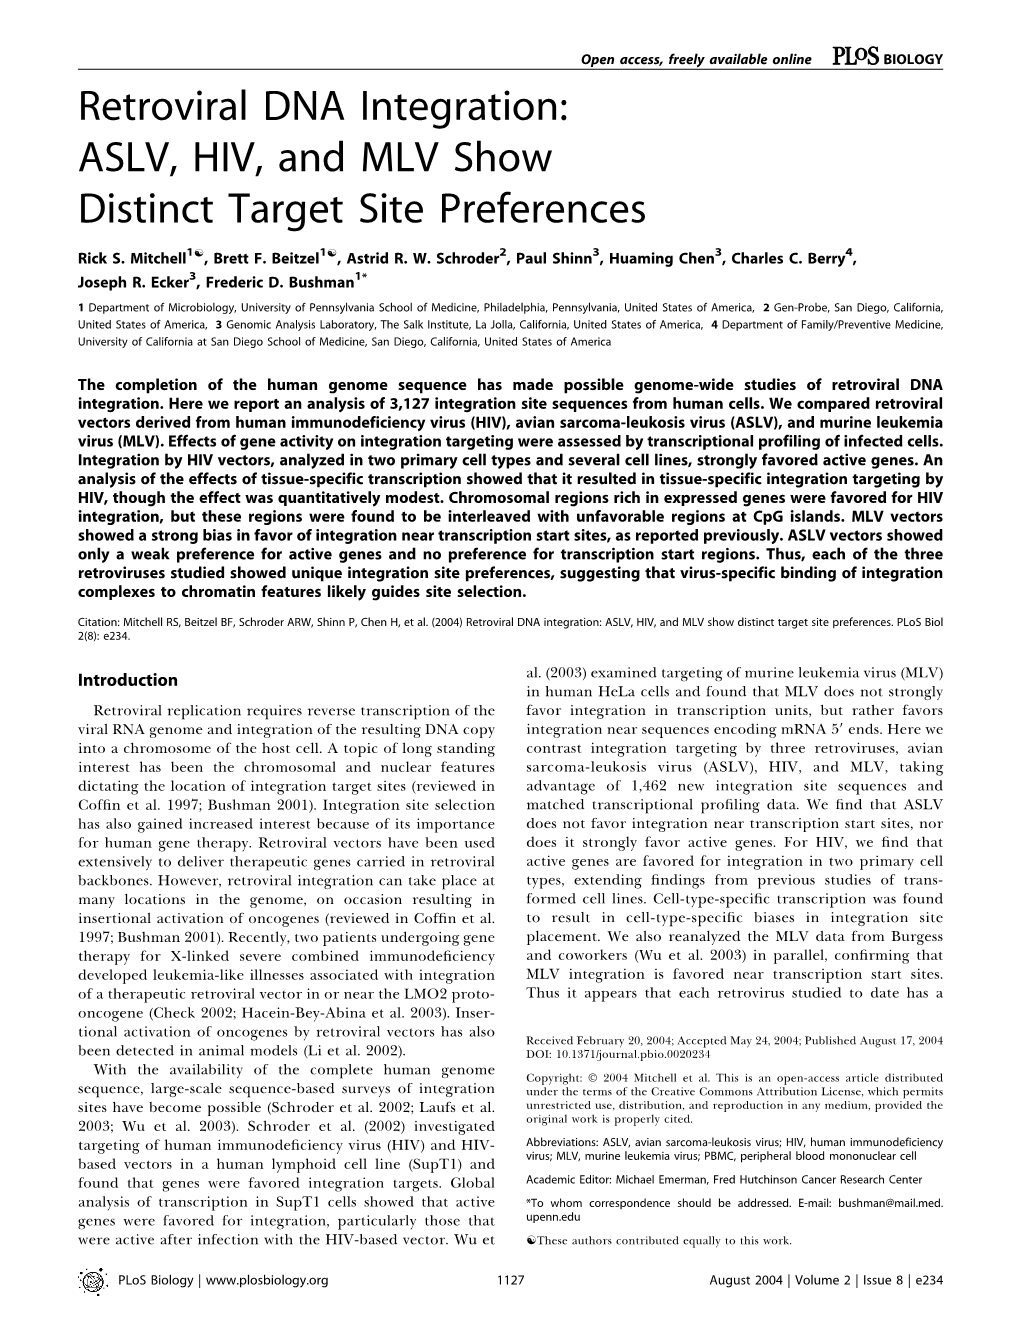 Retroviral DNA Integration: ASLV, HIV, and MLV Show Distinct Target Site Preferences